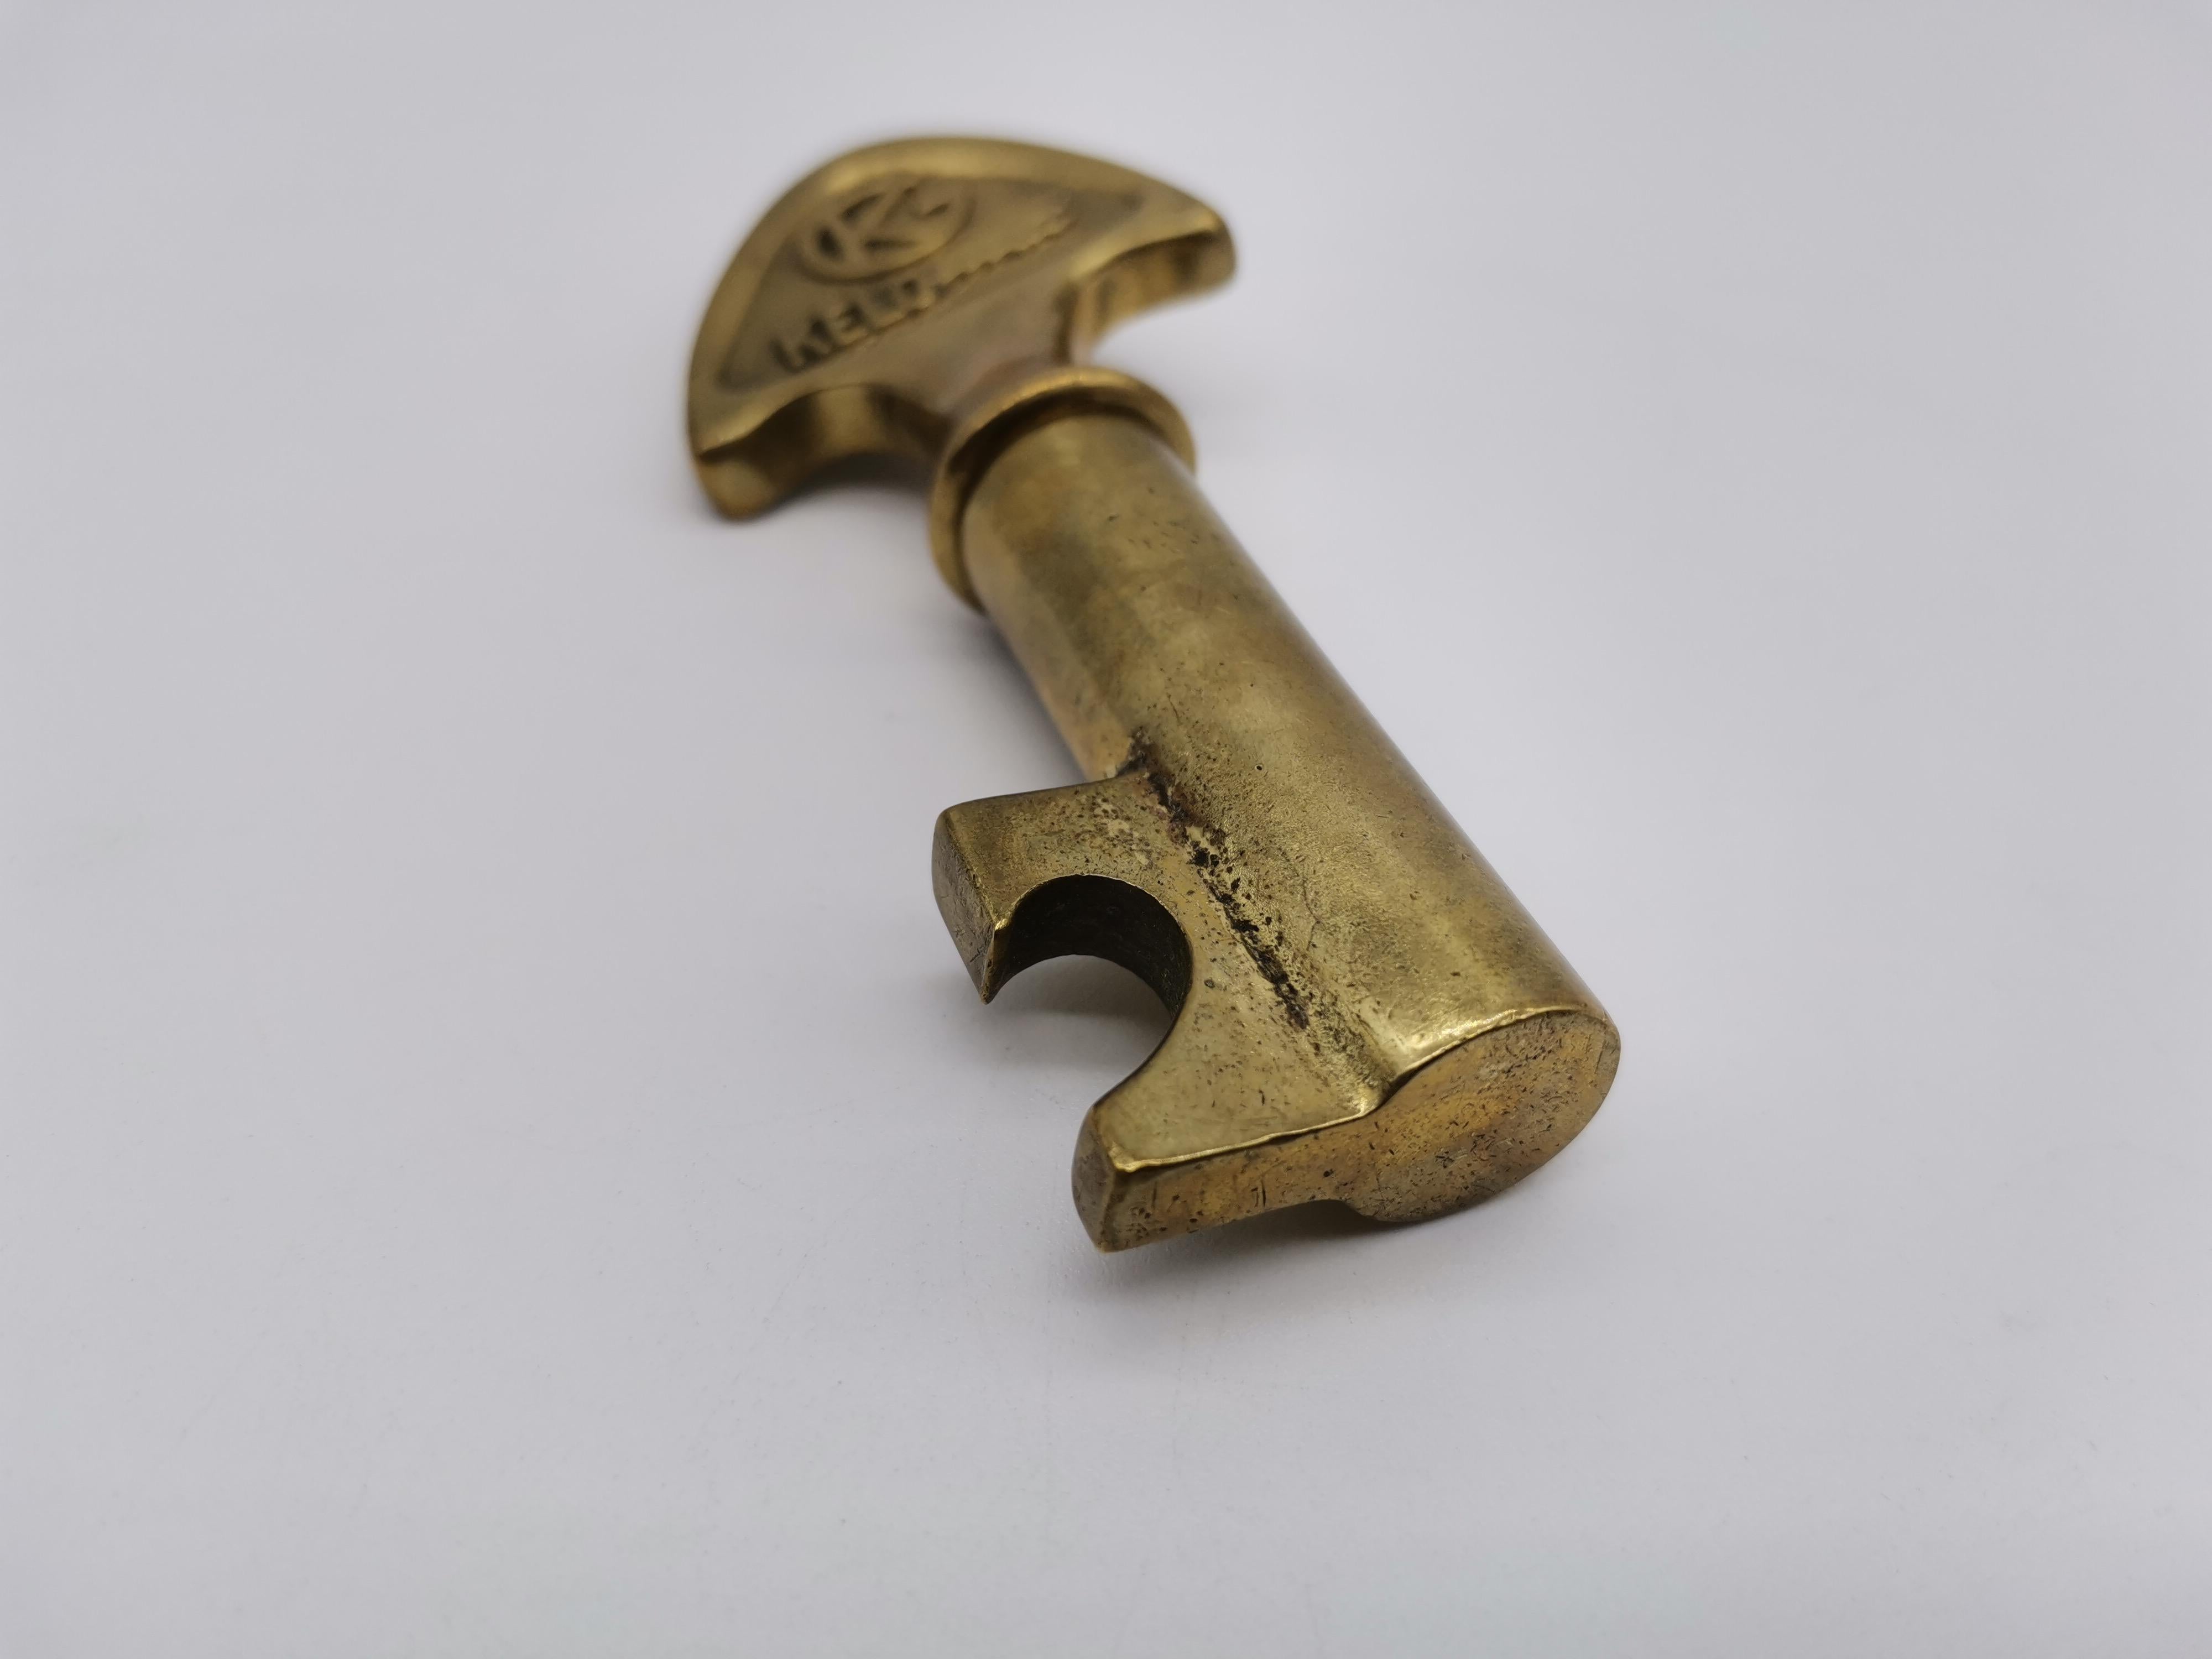 A Kelomat cork screw made of brass by Carl Auböck.